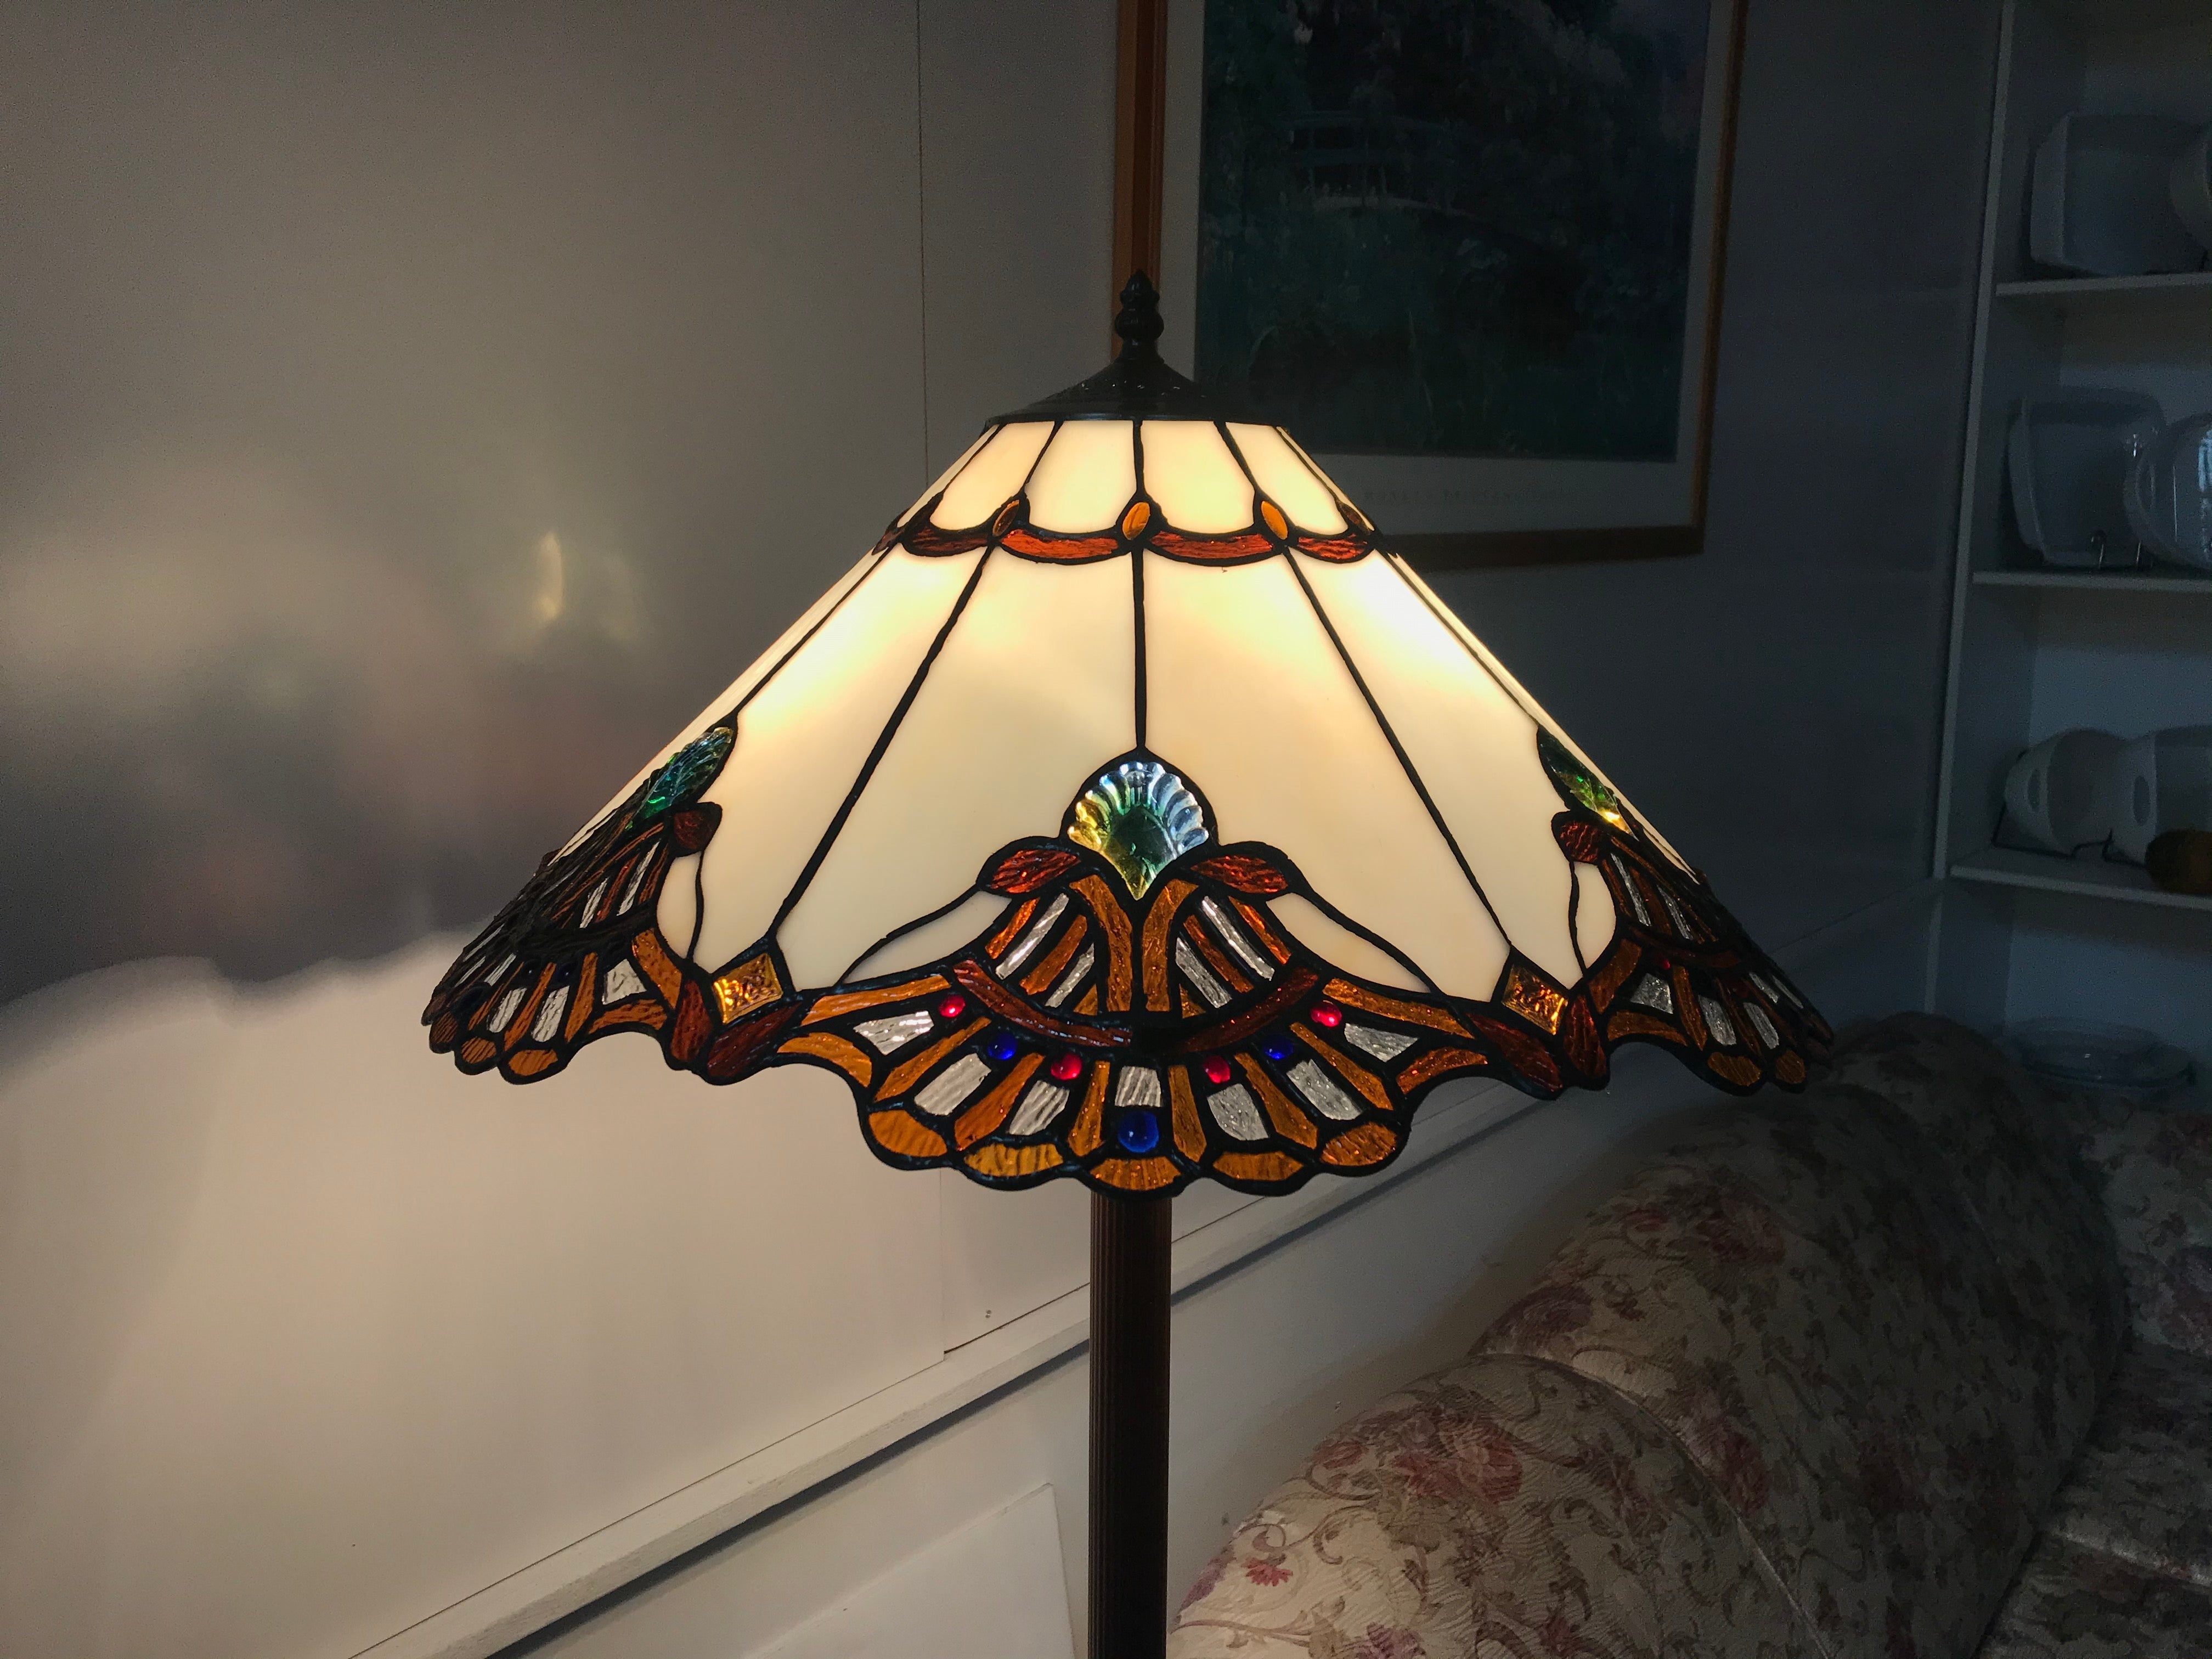 Hugh 20" Jewel Carousel Stained Glass Tiffany Floor Lamp